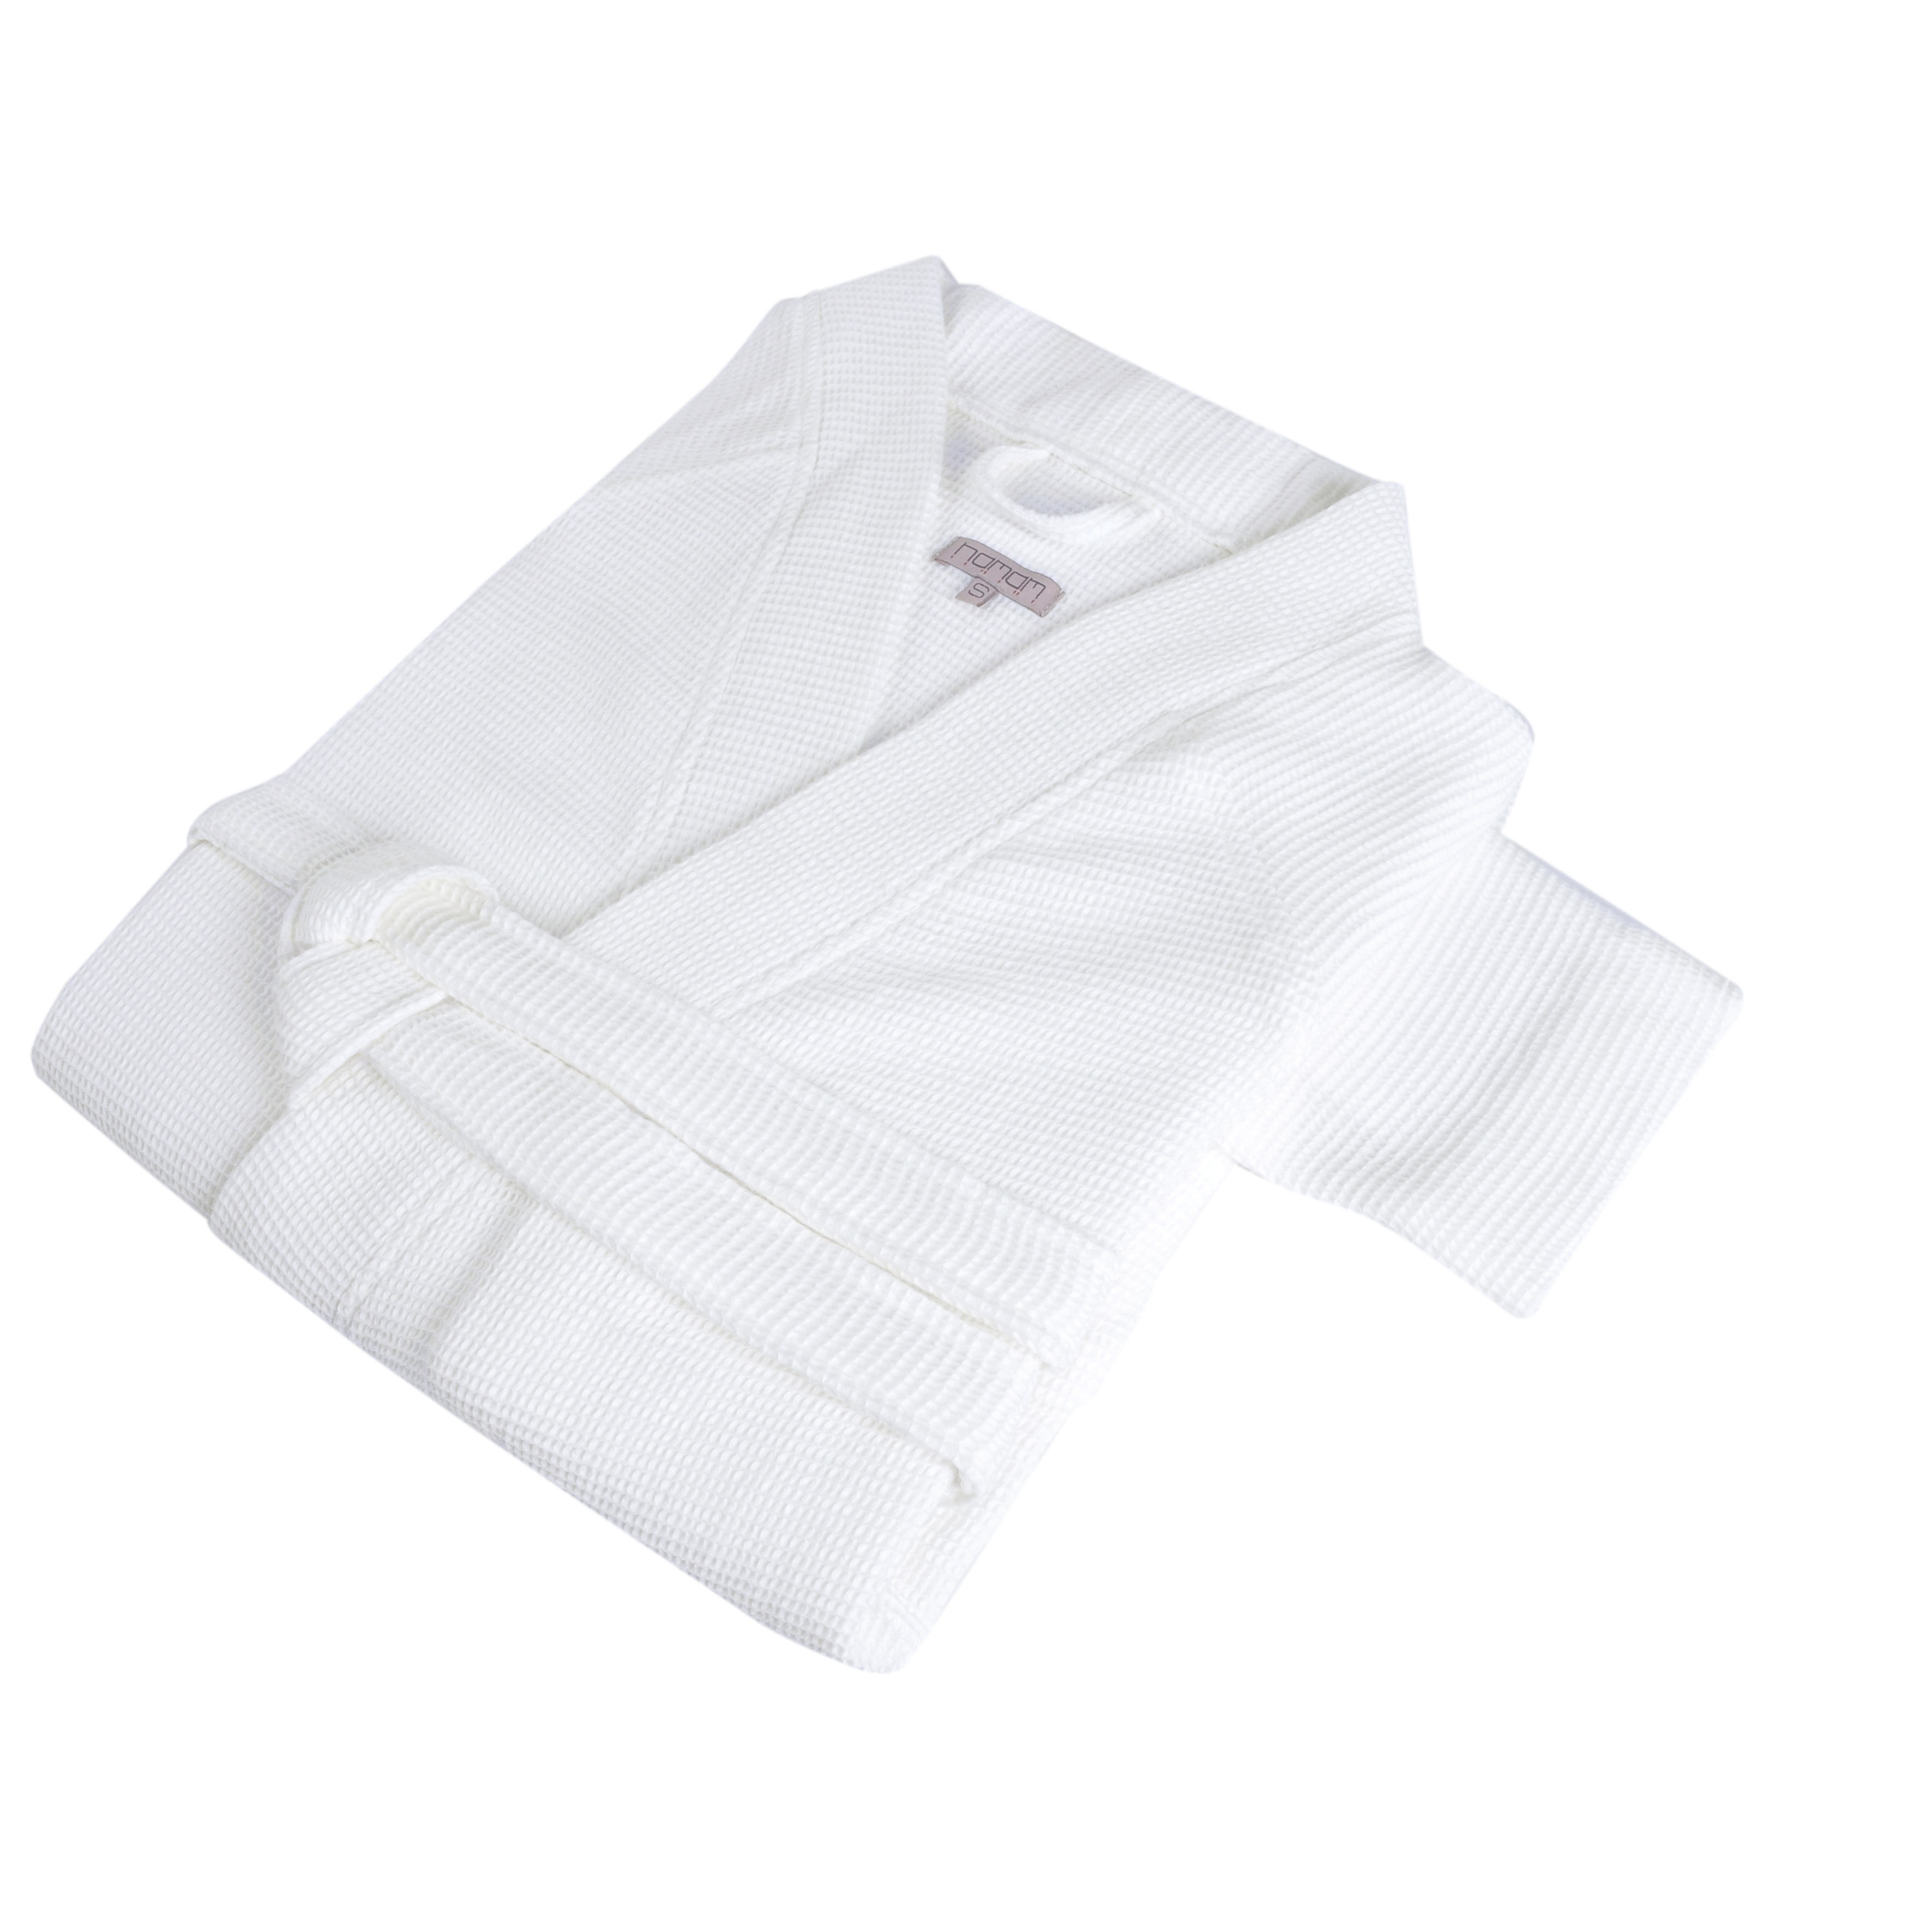 Банный халат Calamus Цвет: Белый (S-M), размер S-M ham436506 Банный халат Calamus Цвет: Белый (S-M) - фото 1